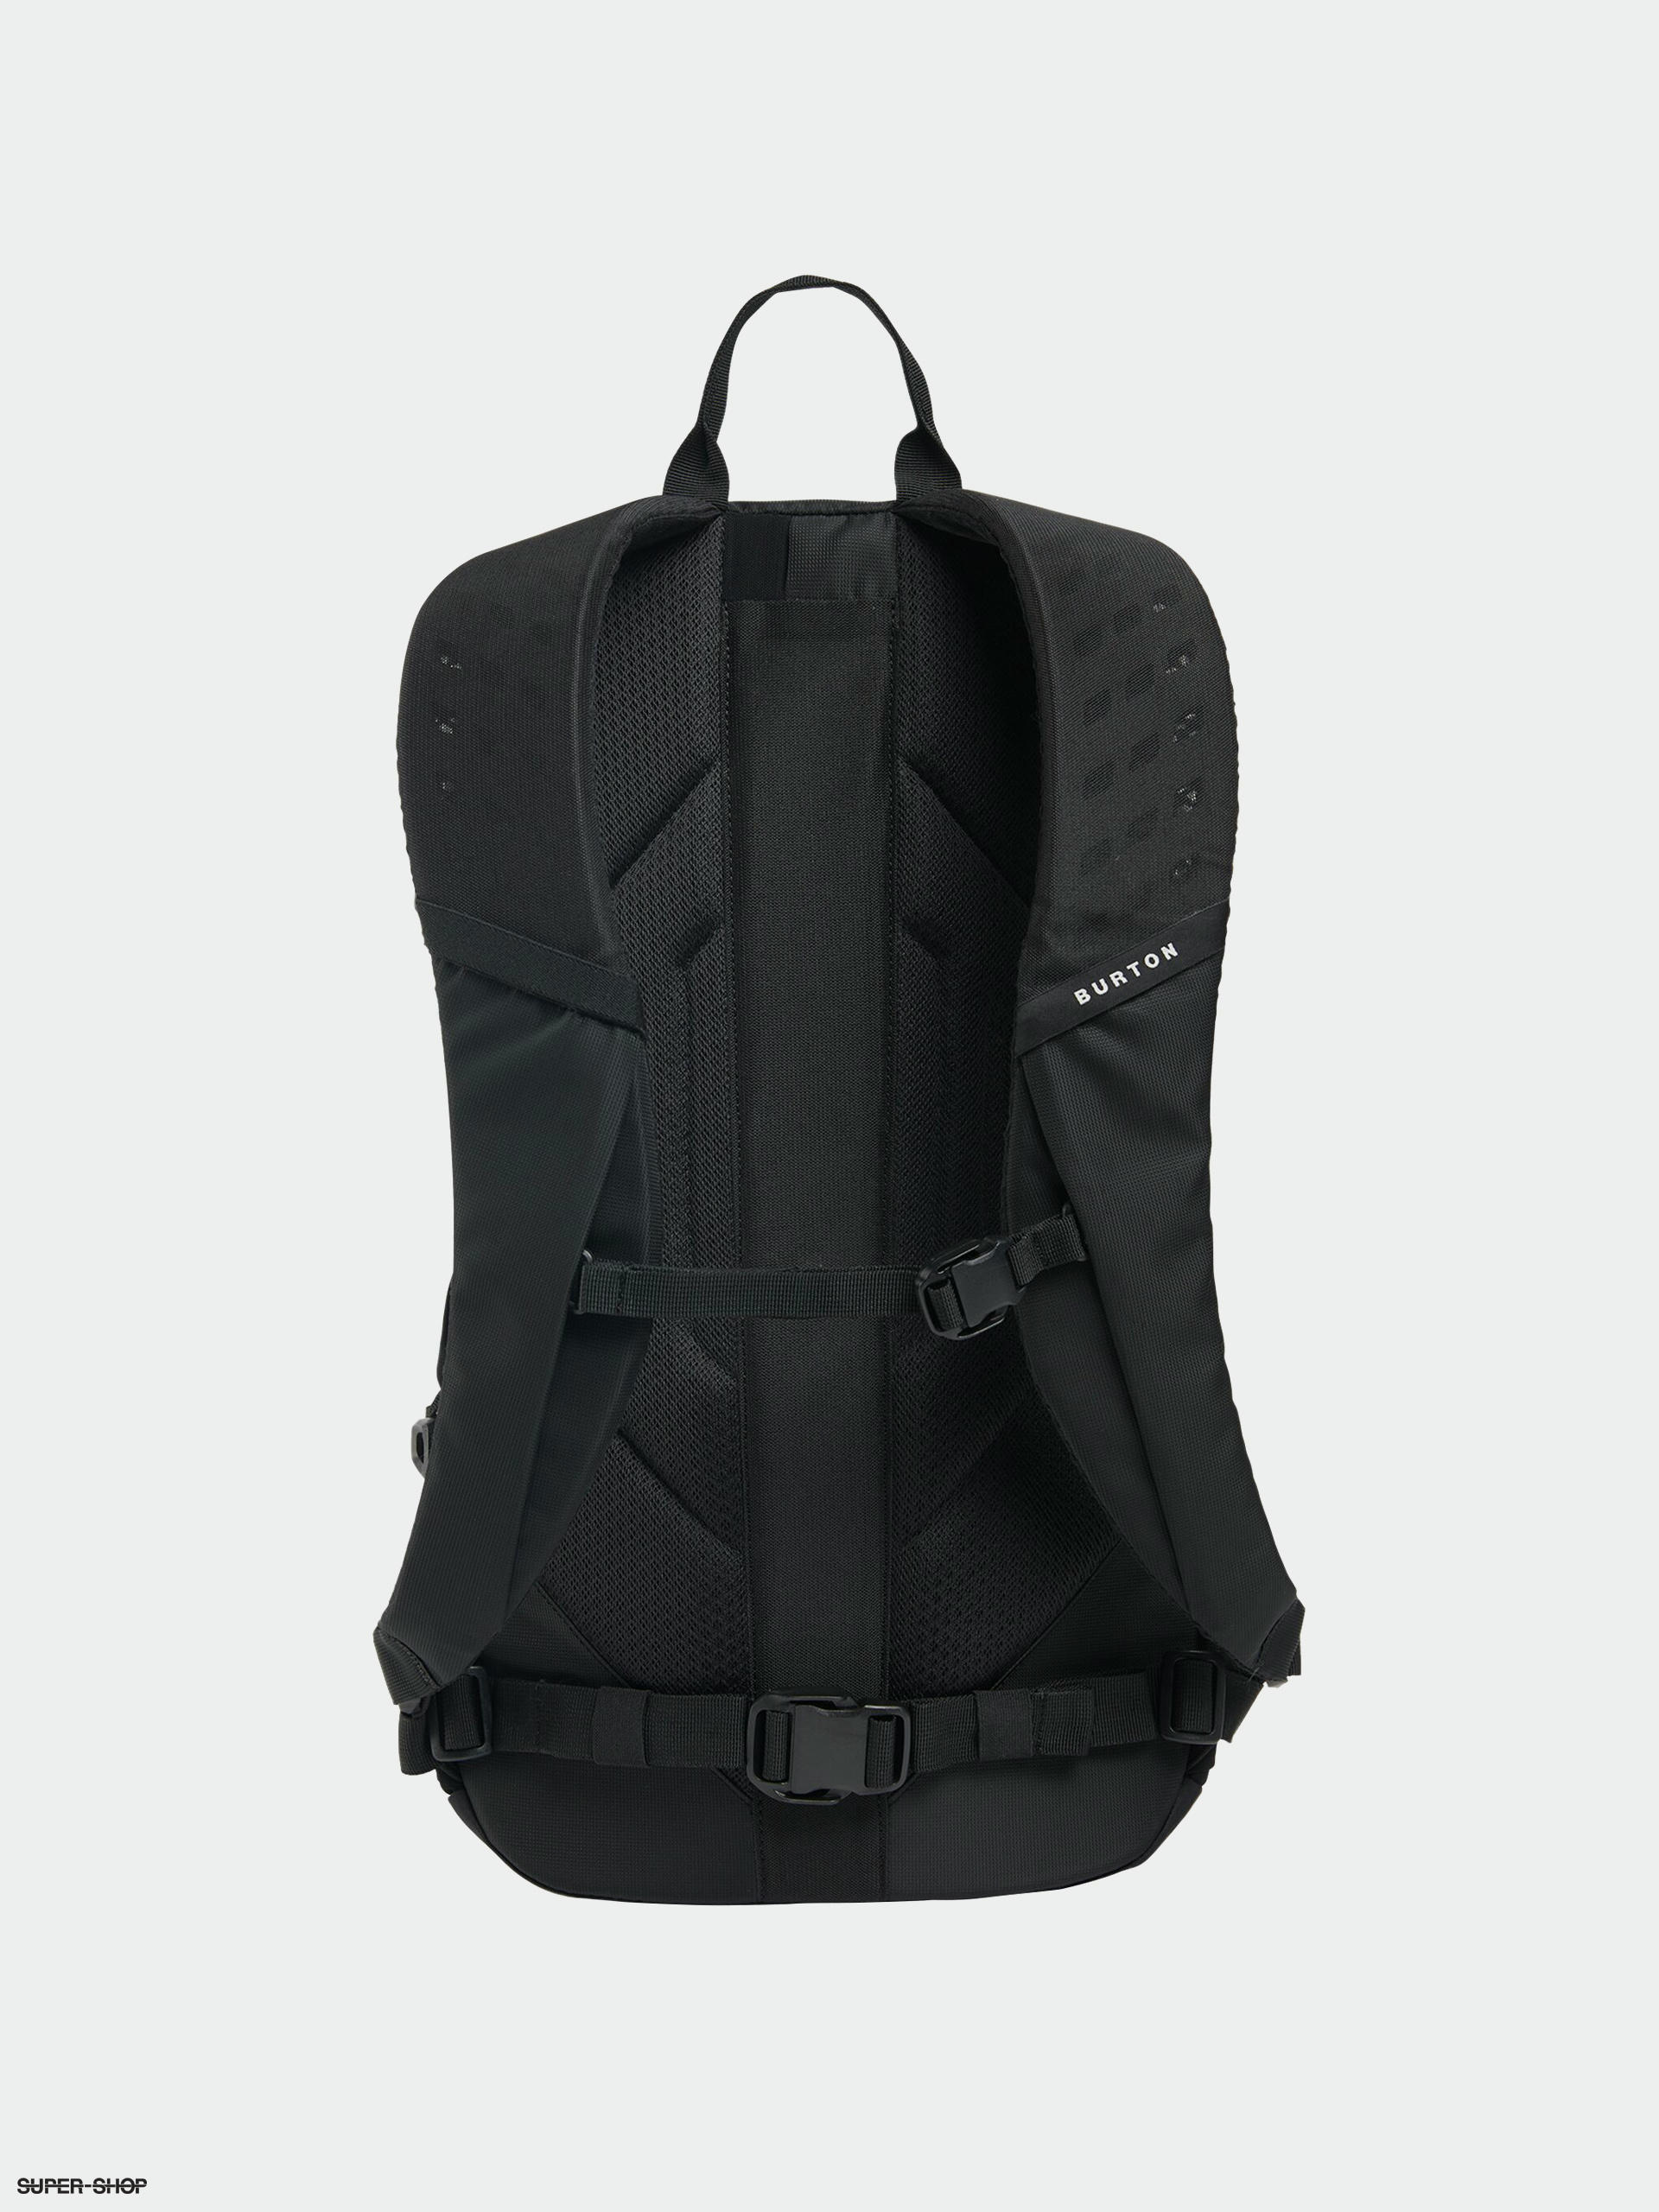 Burton Day Hiker 22L Backpack (true black)